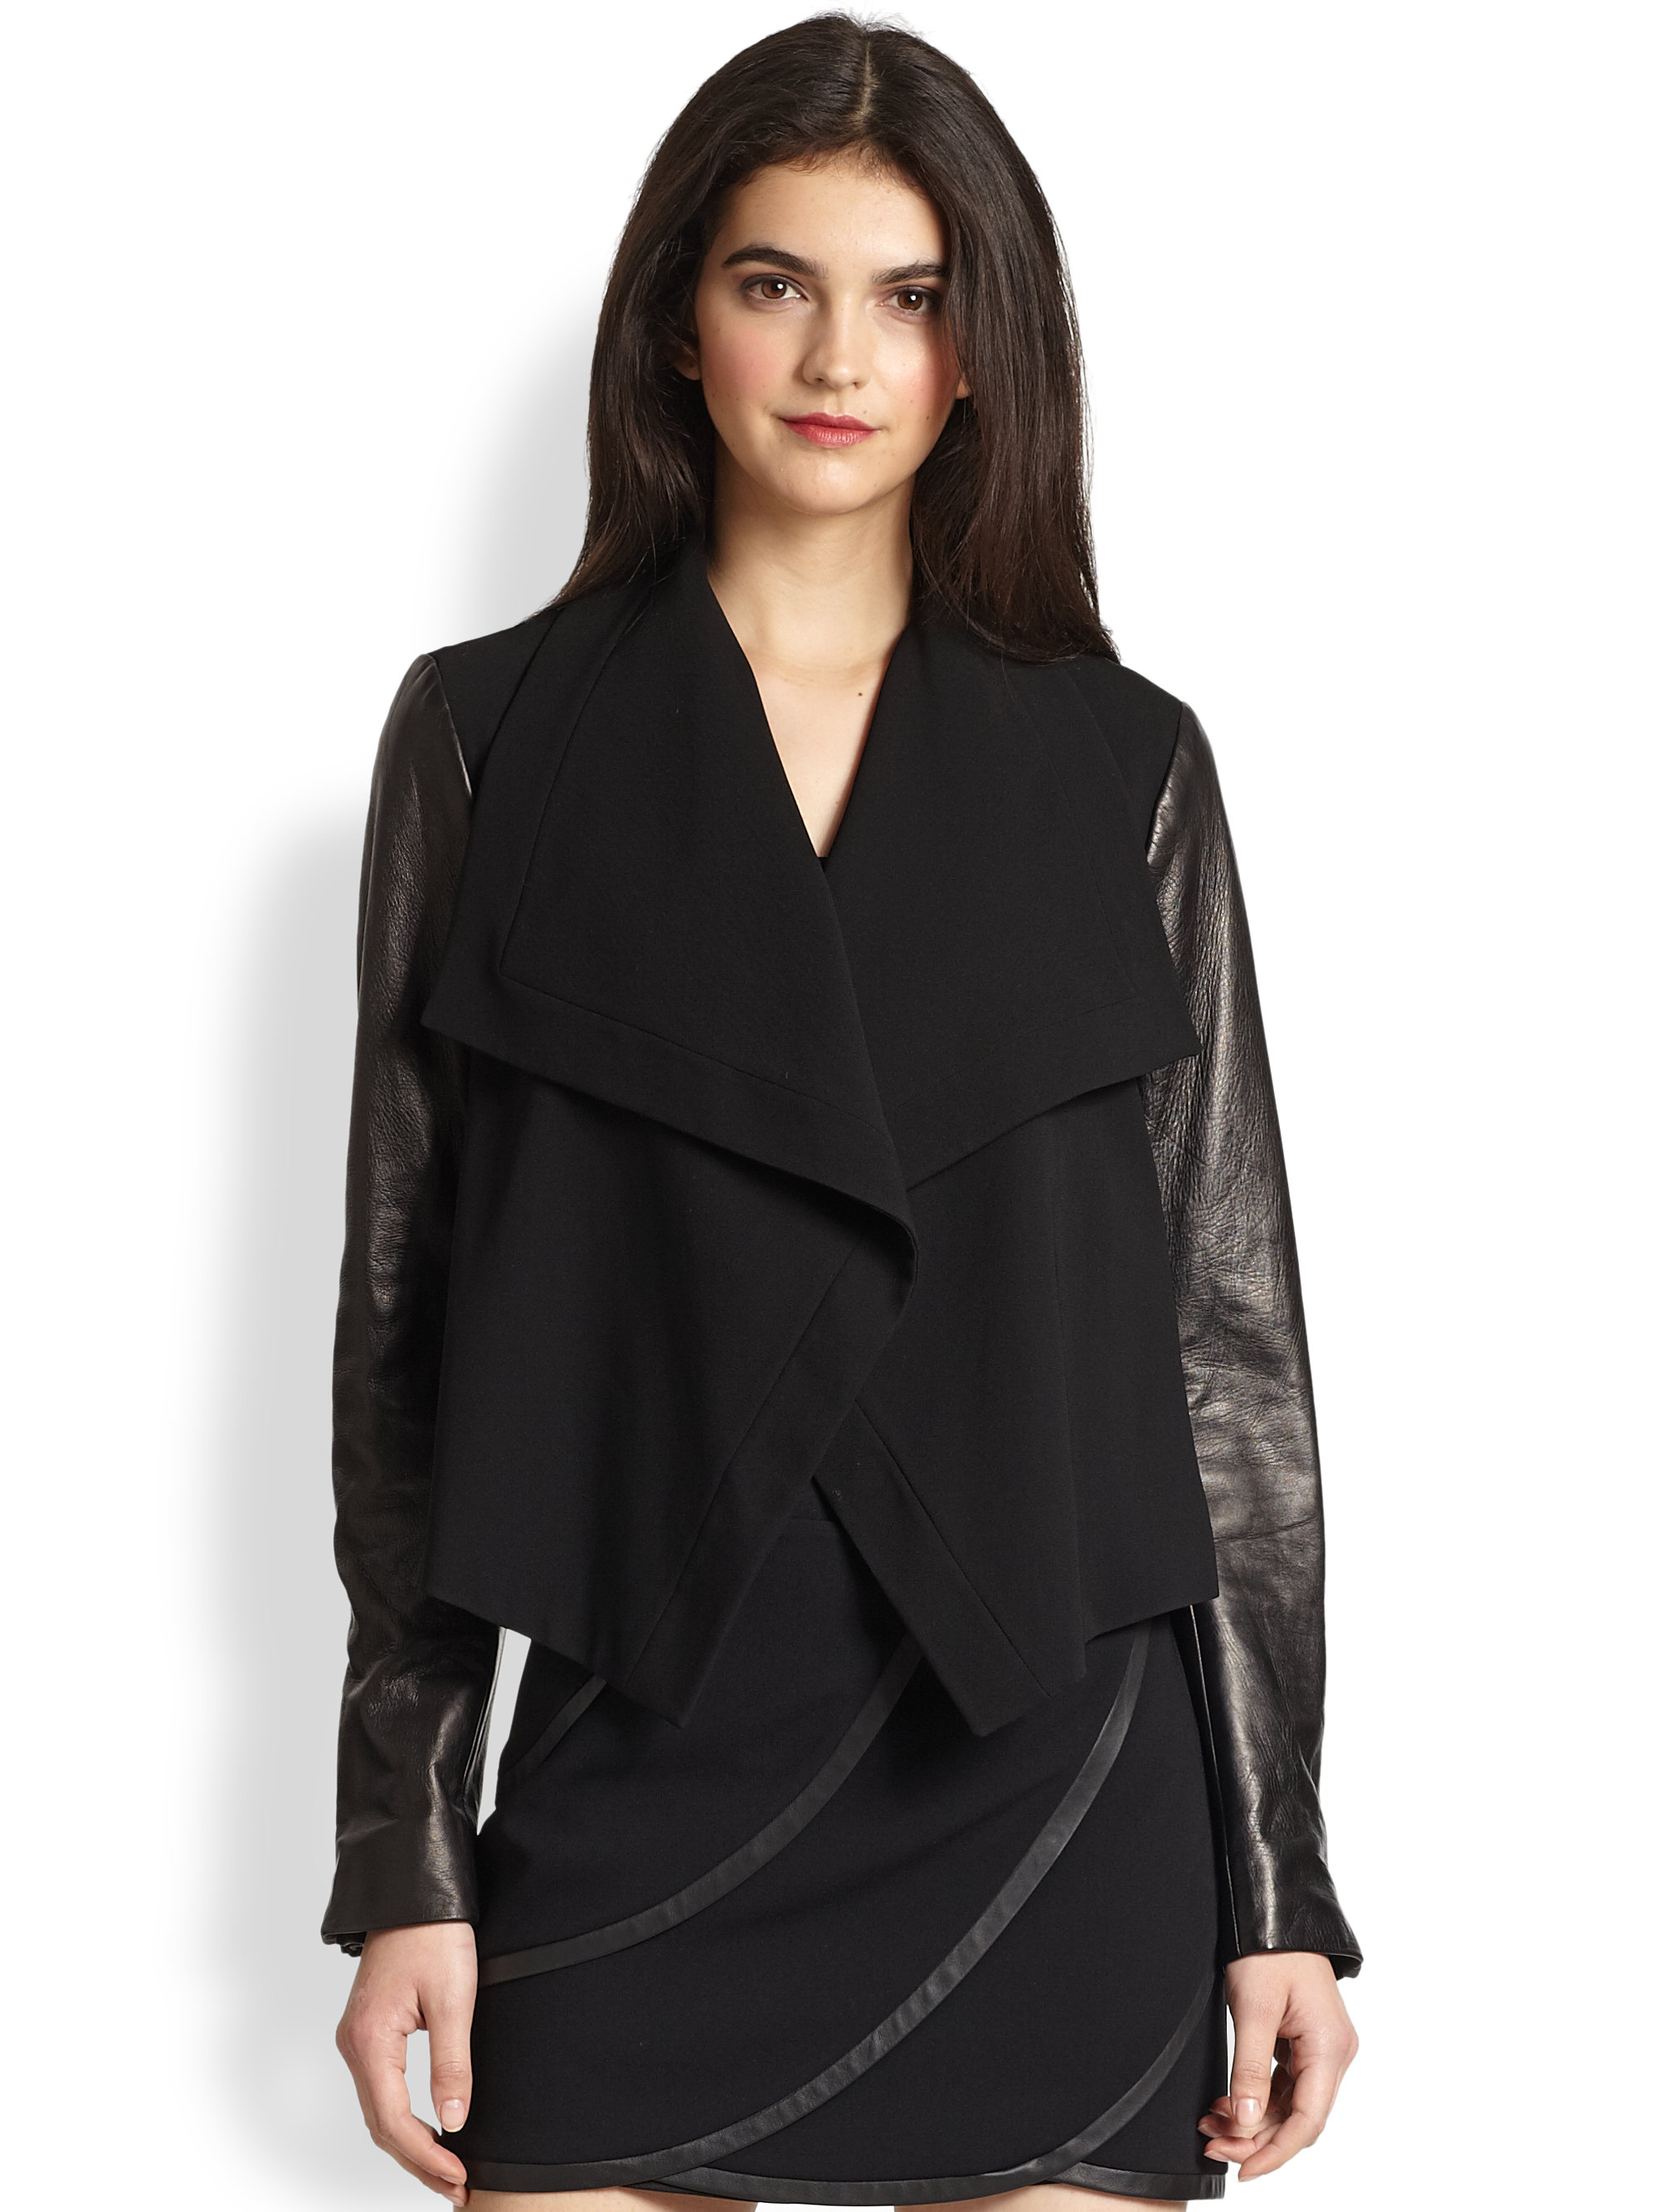 Diane Von Furstenberg Olympia Leather Combo Jacket in Black | Lyst